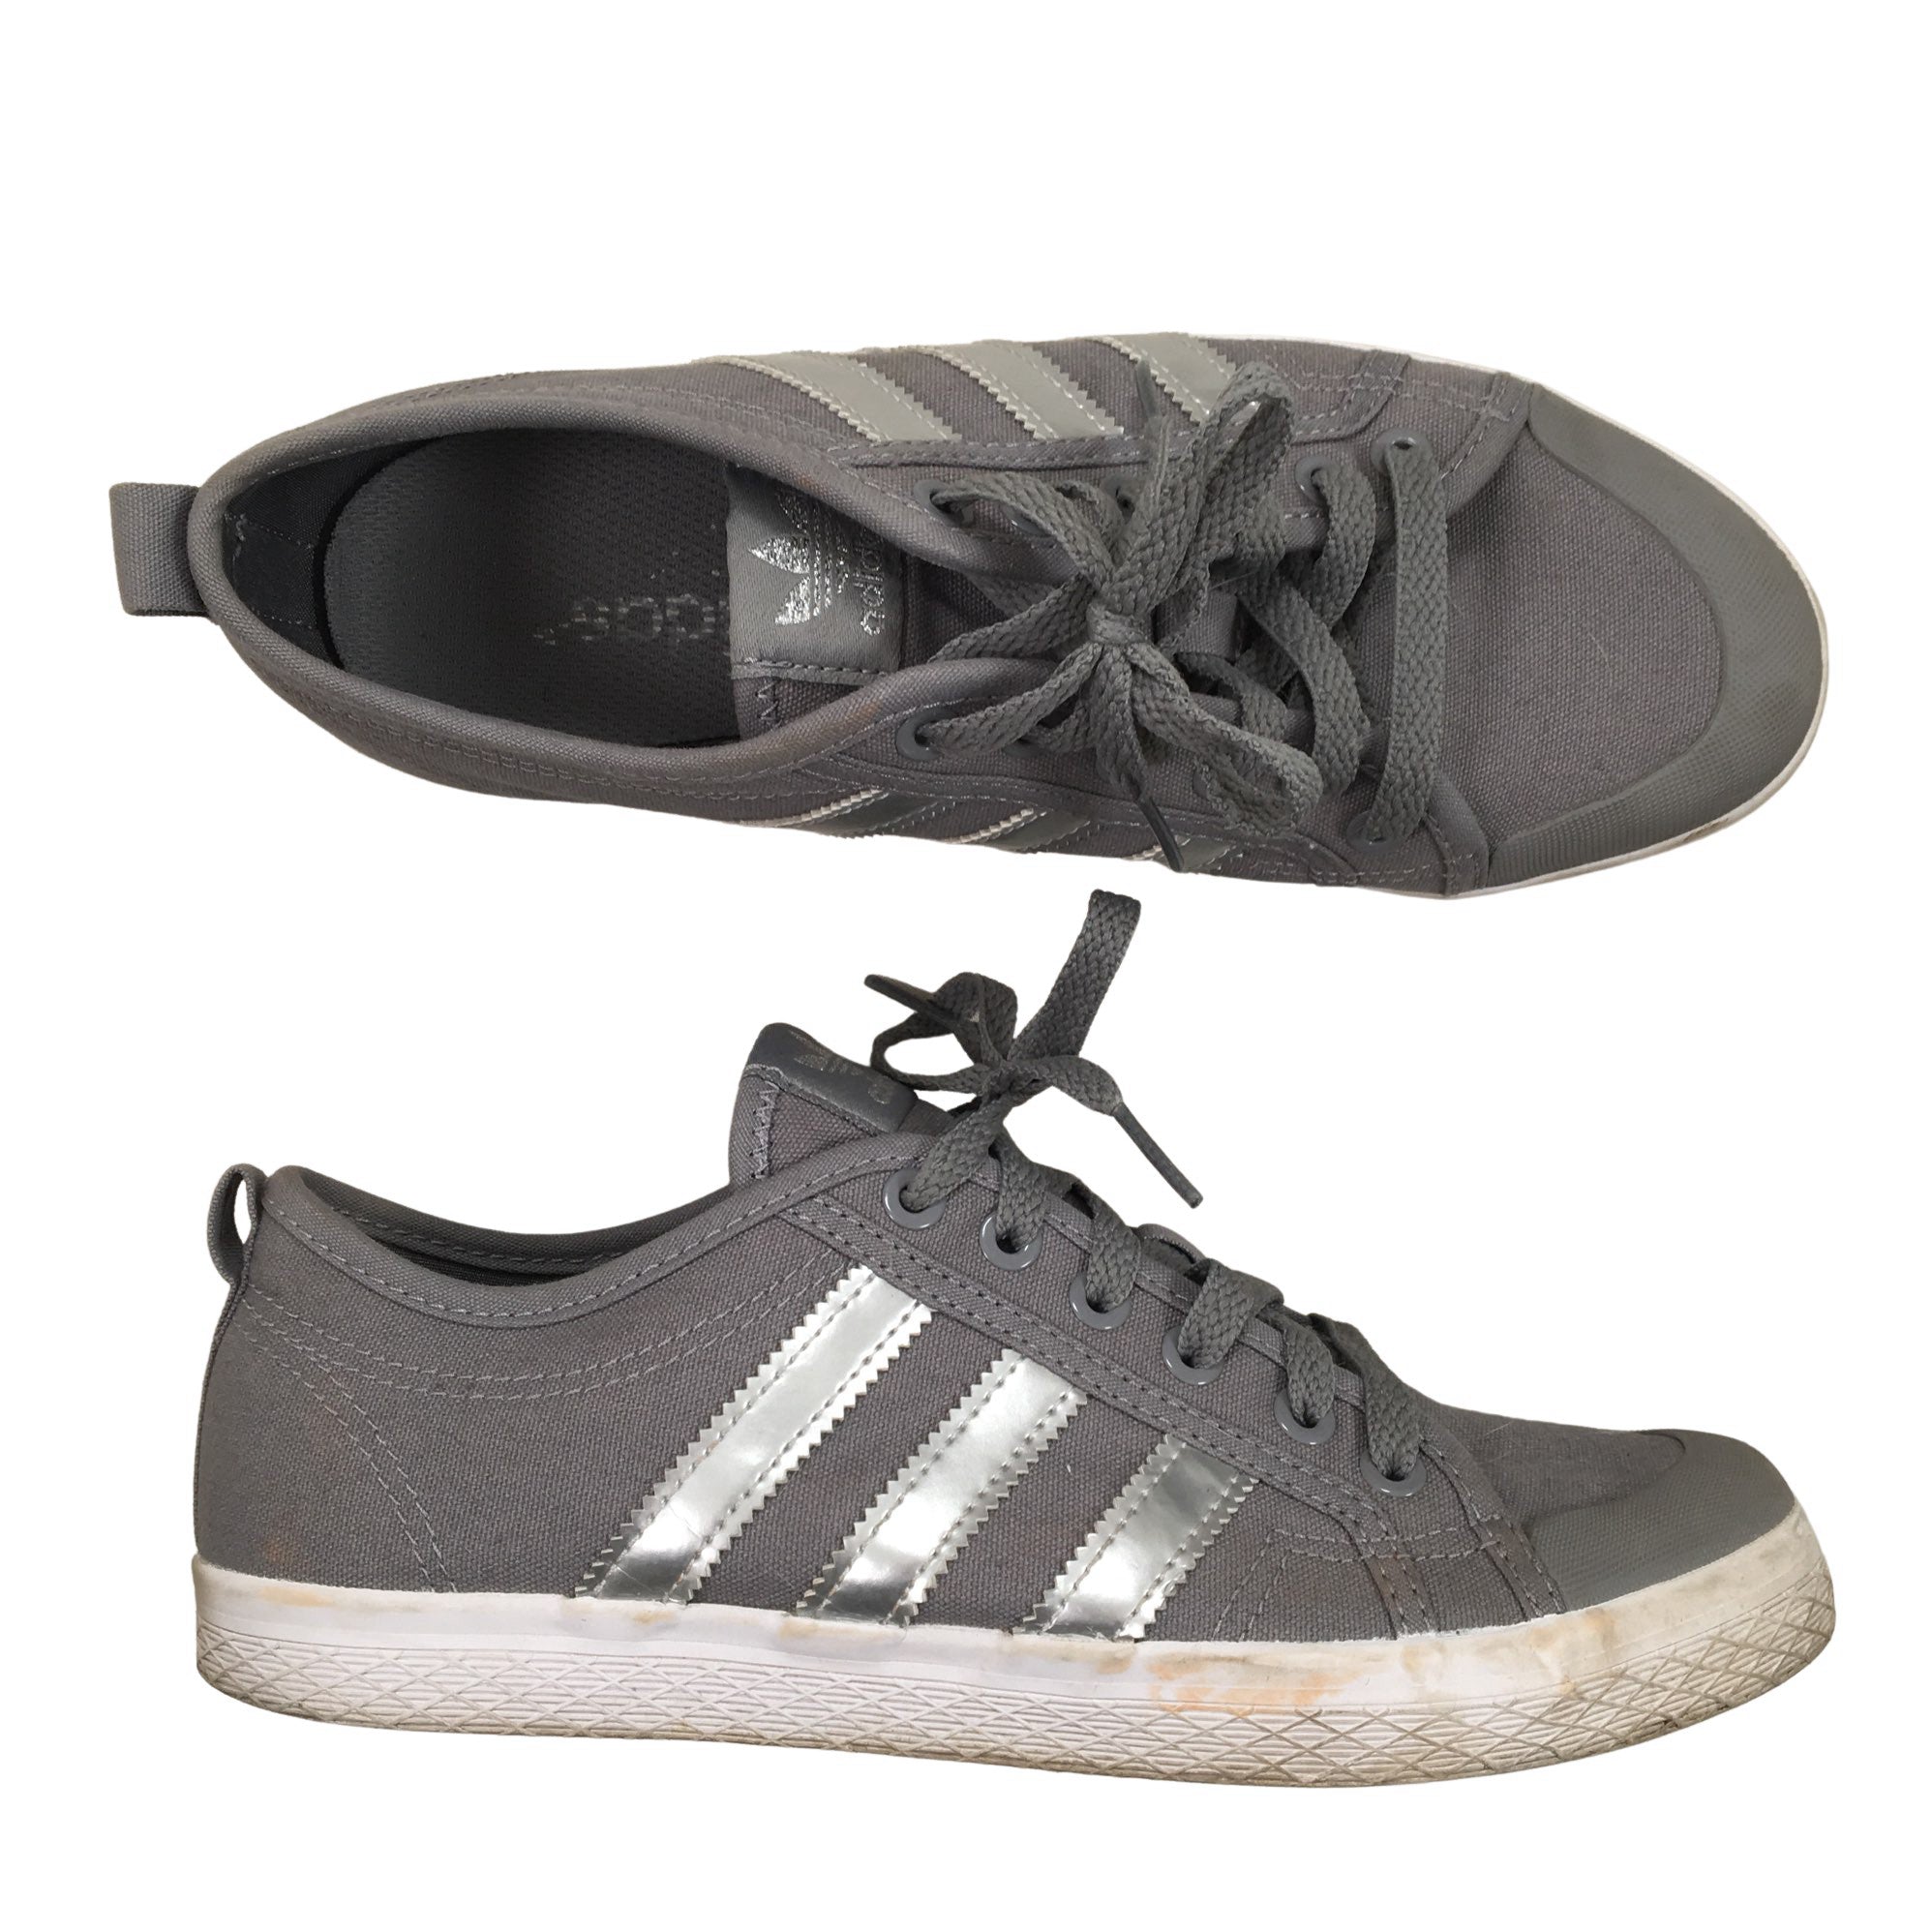 Women's Adidas sneakers, size 40 (Grey)